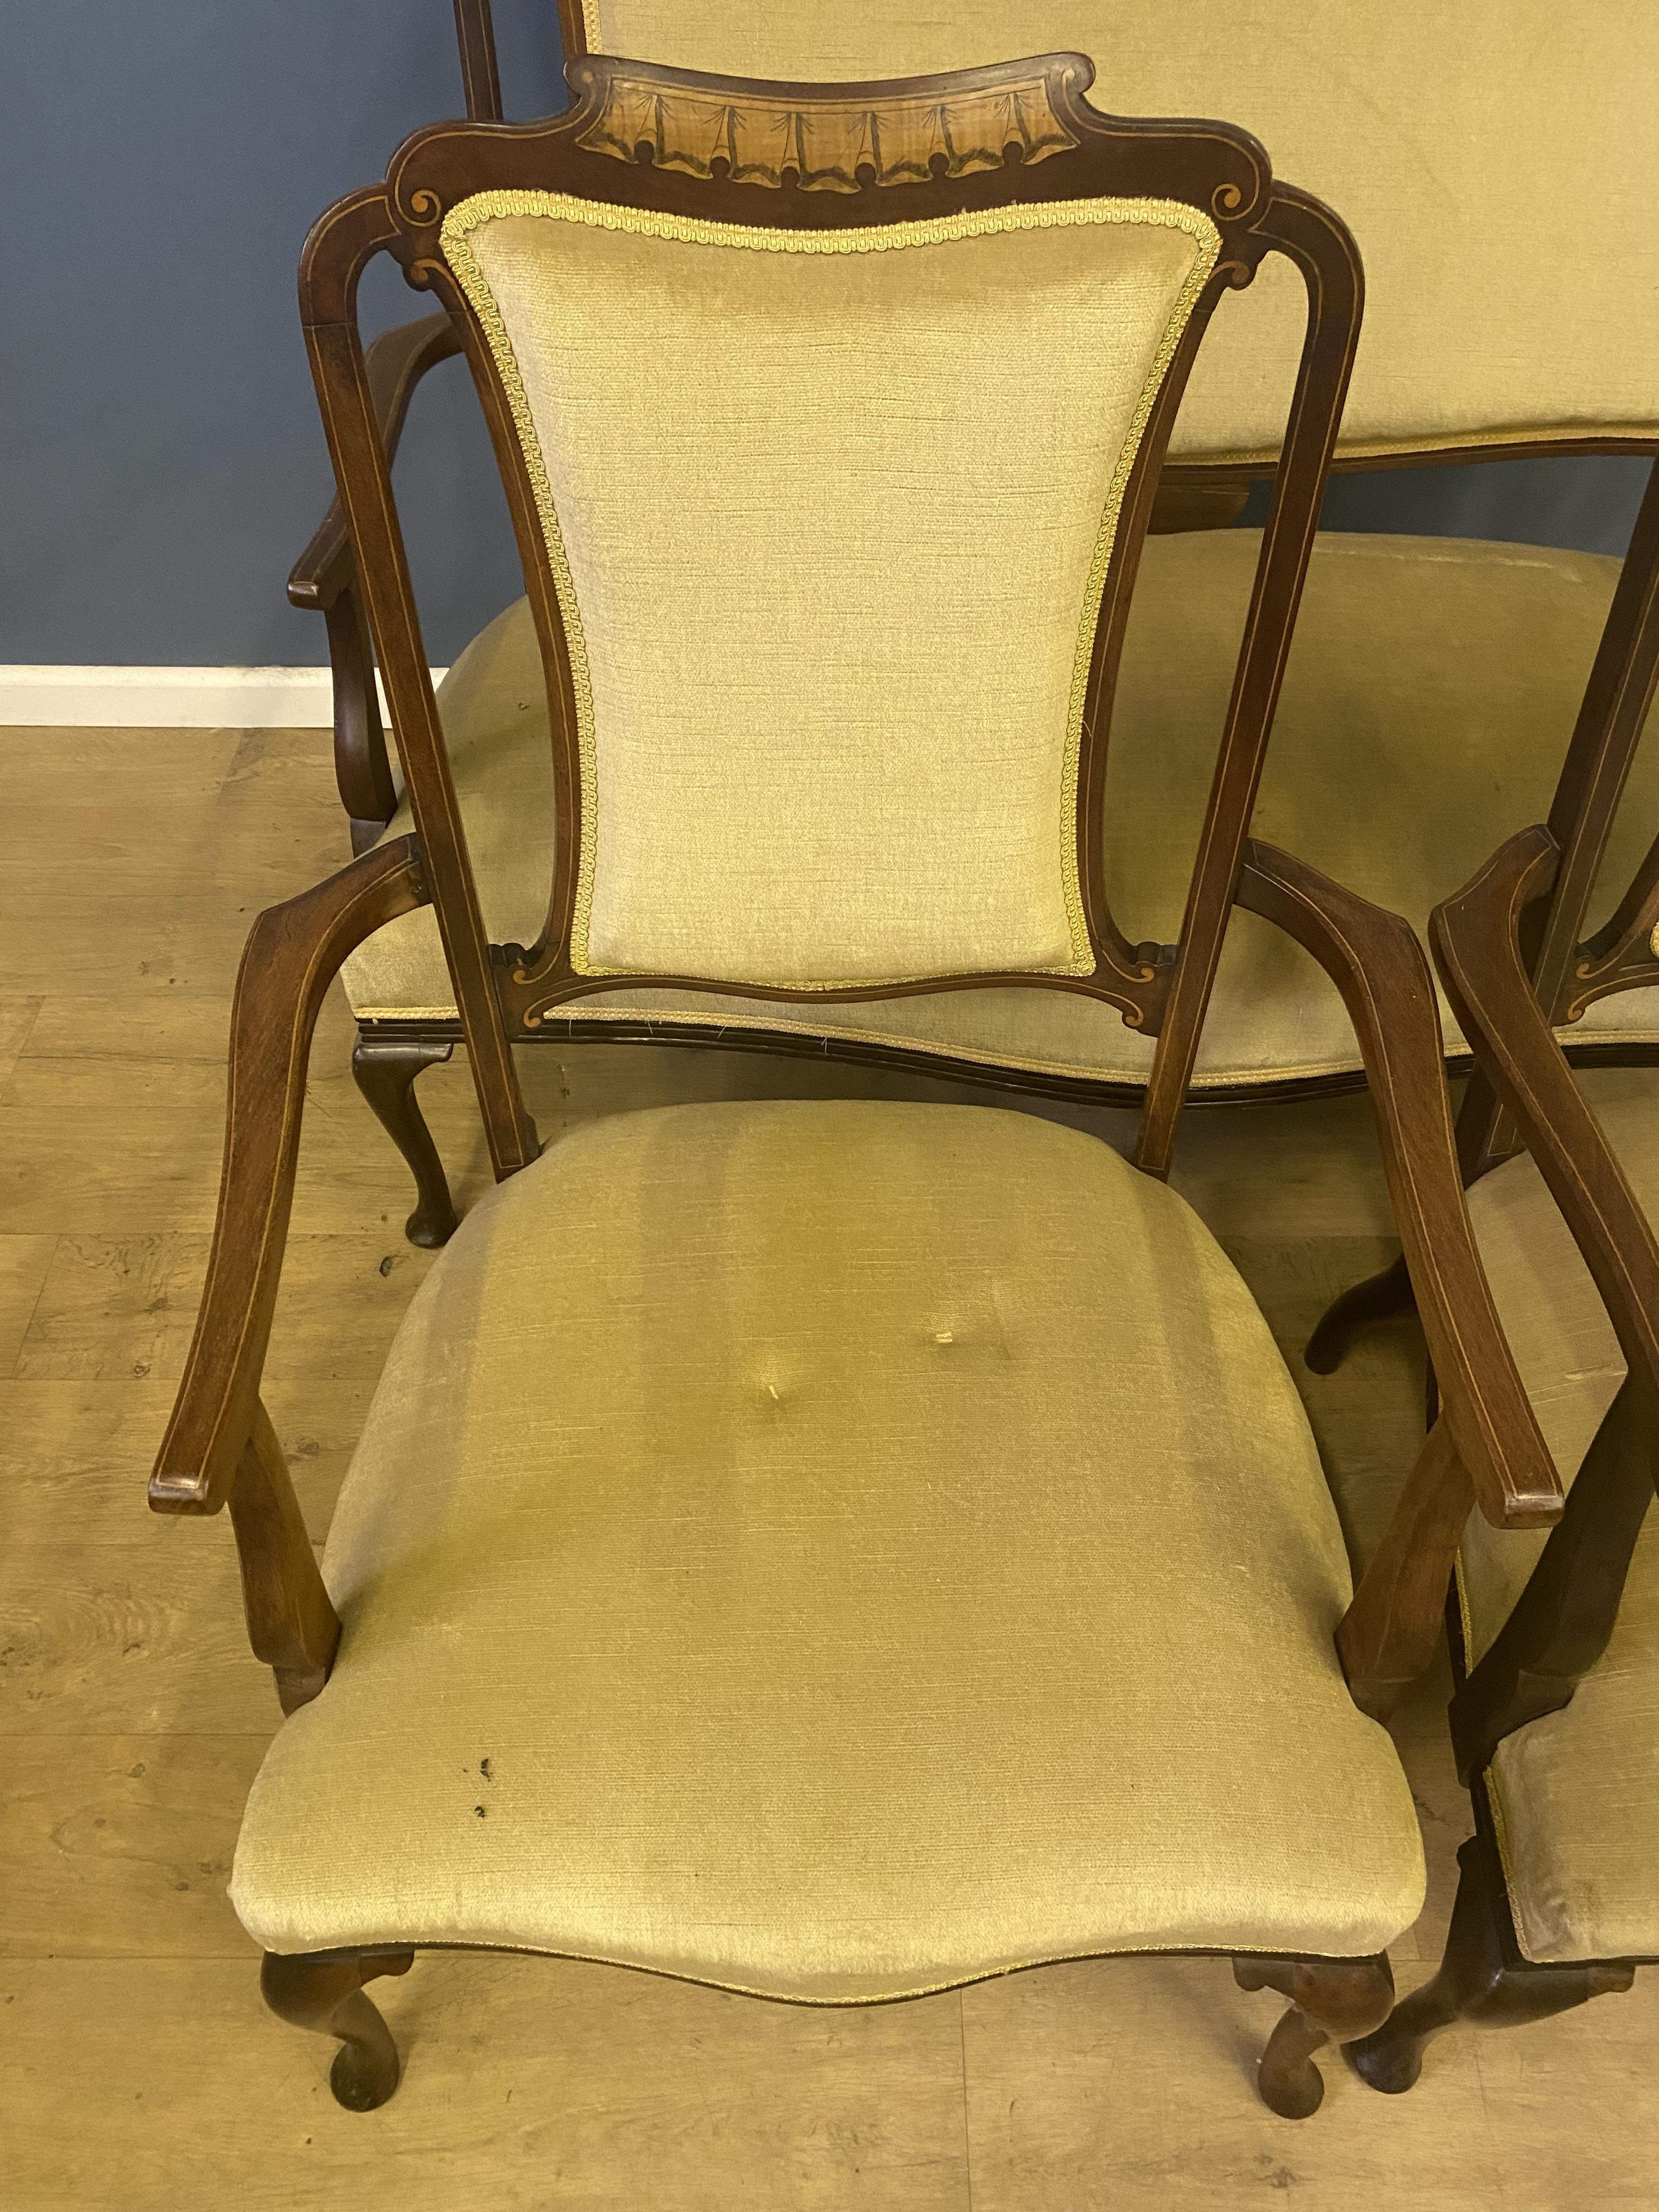 Six mahogany splat back dining chairs - Image 5 of 7